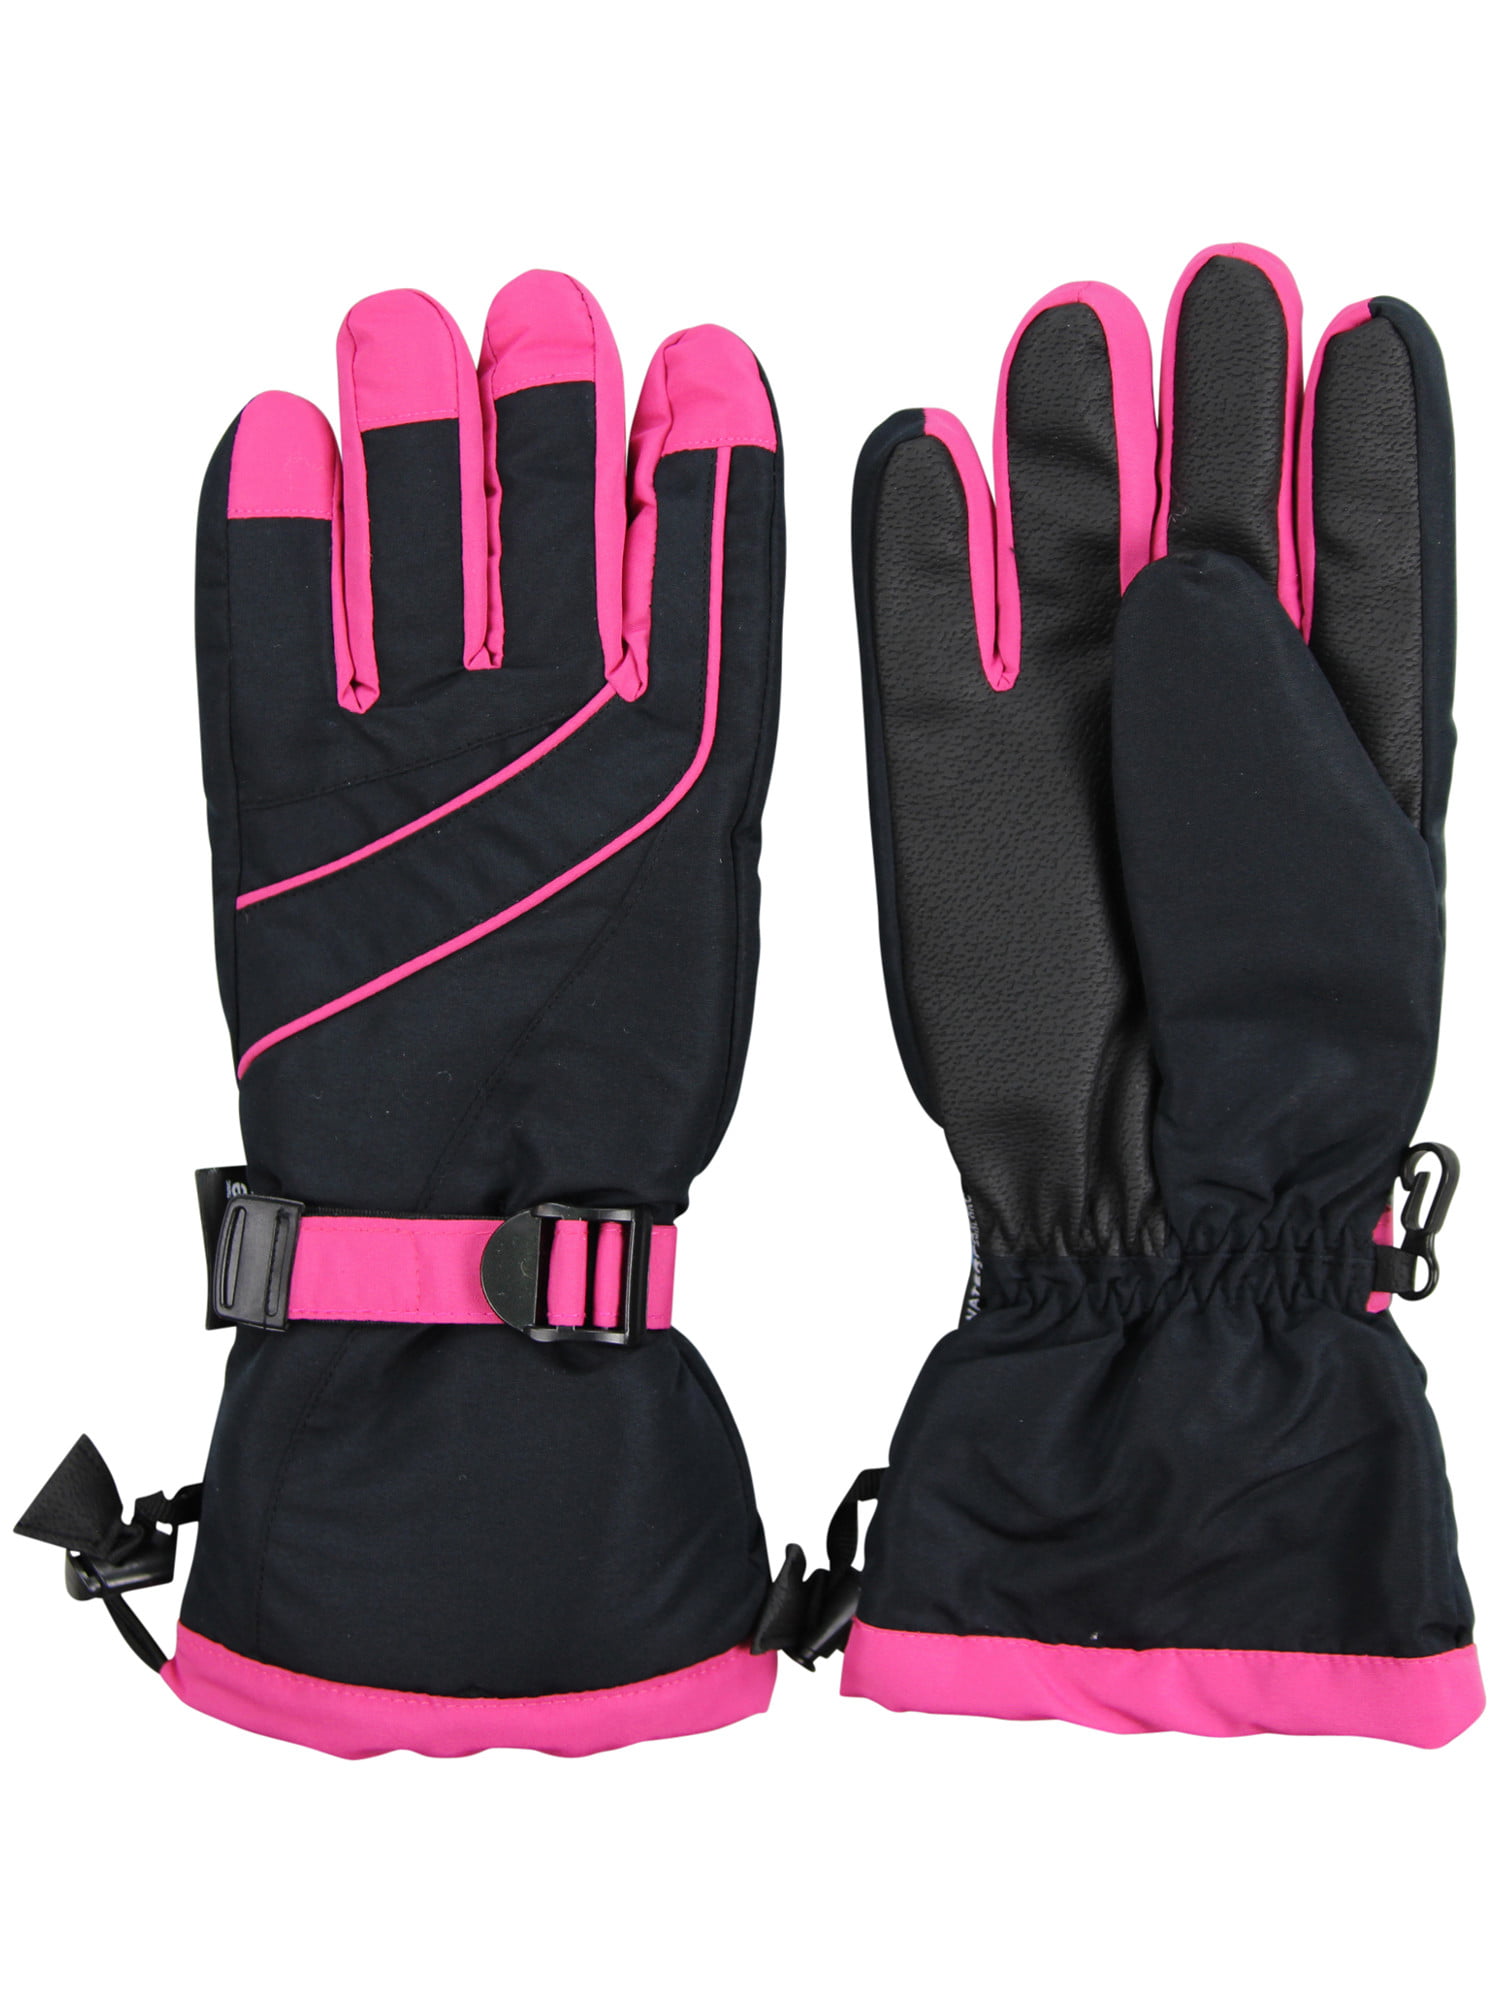 Urban Boundaries Women's Insulated Waterproof Winter Snow Ski Glove (Black/Hot Pink, Medium